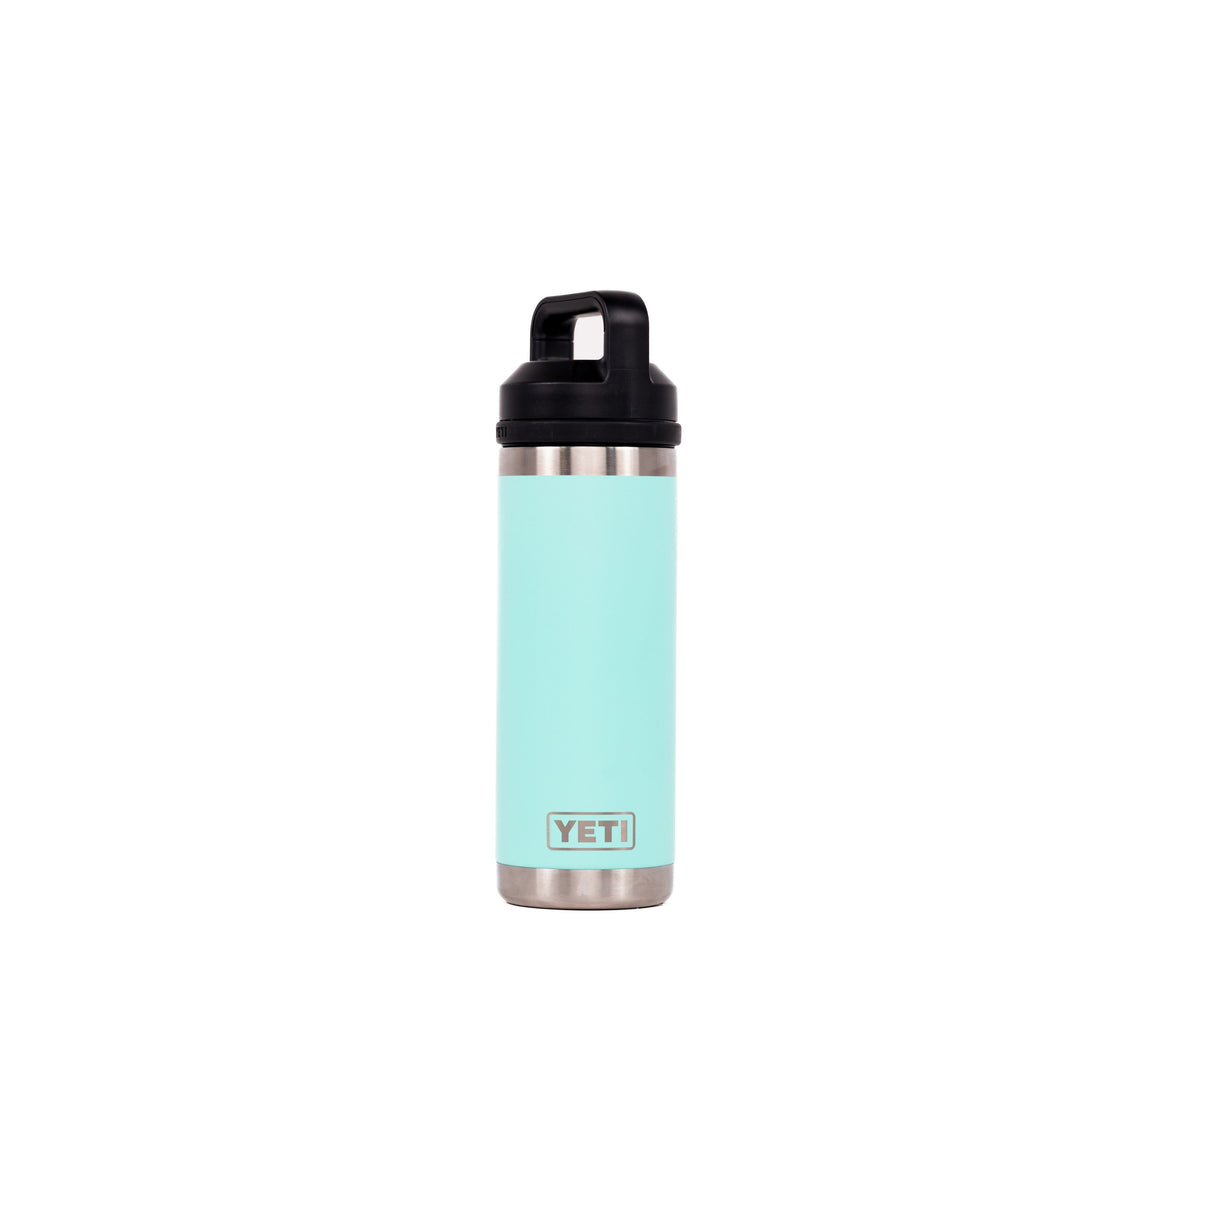 Yeti Reef Blue 18oz Rambler Bottle 2018 🌊 RARE Collector Lid